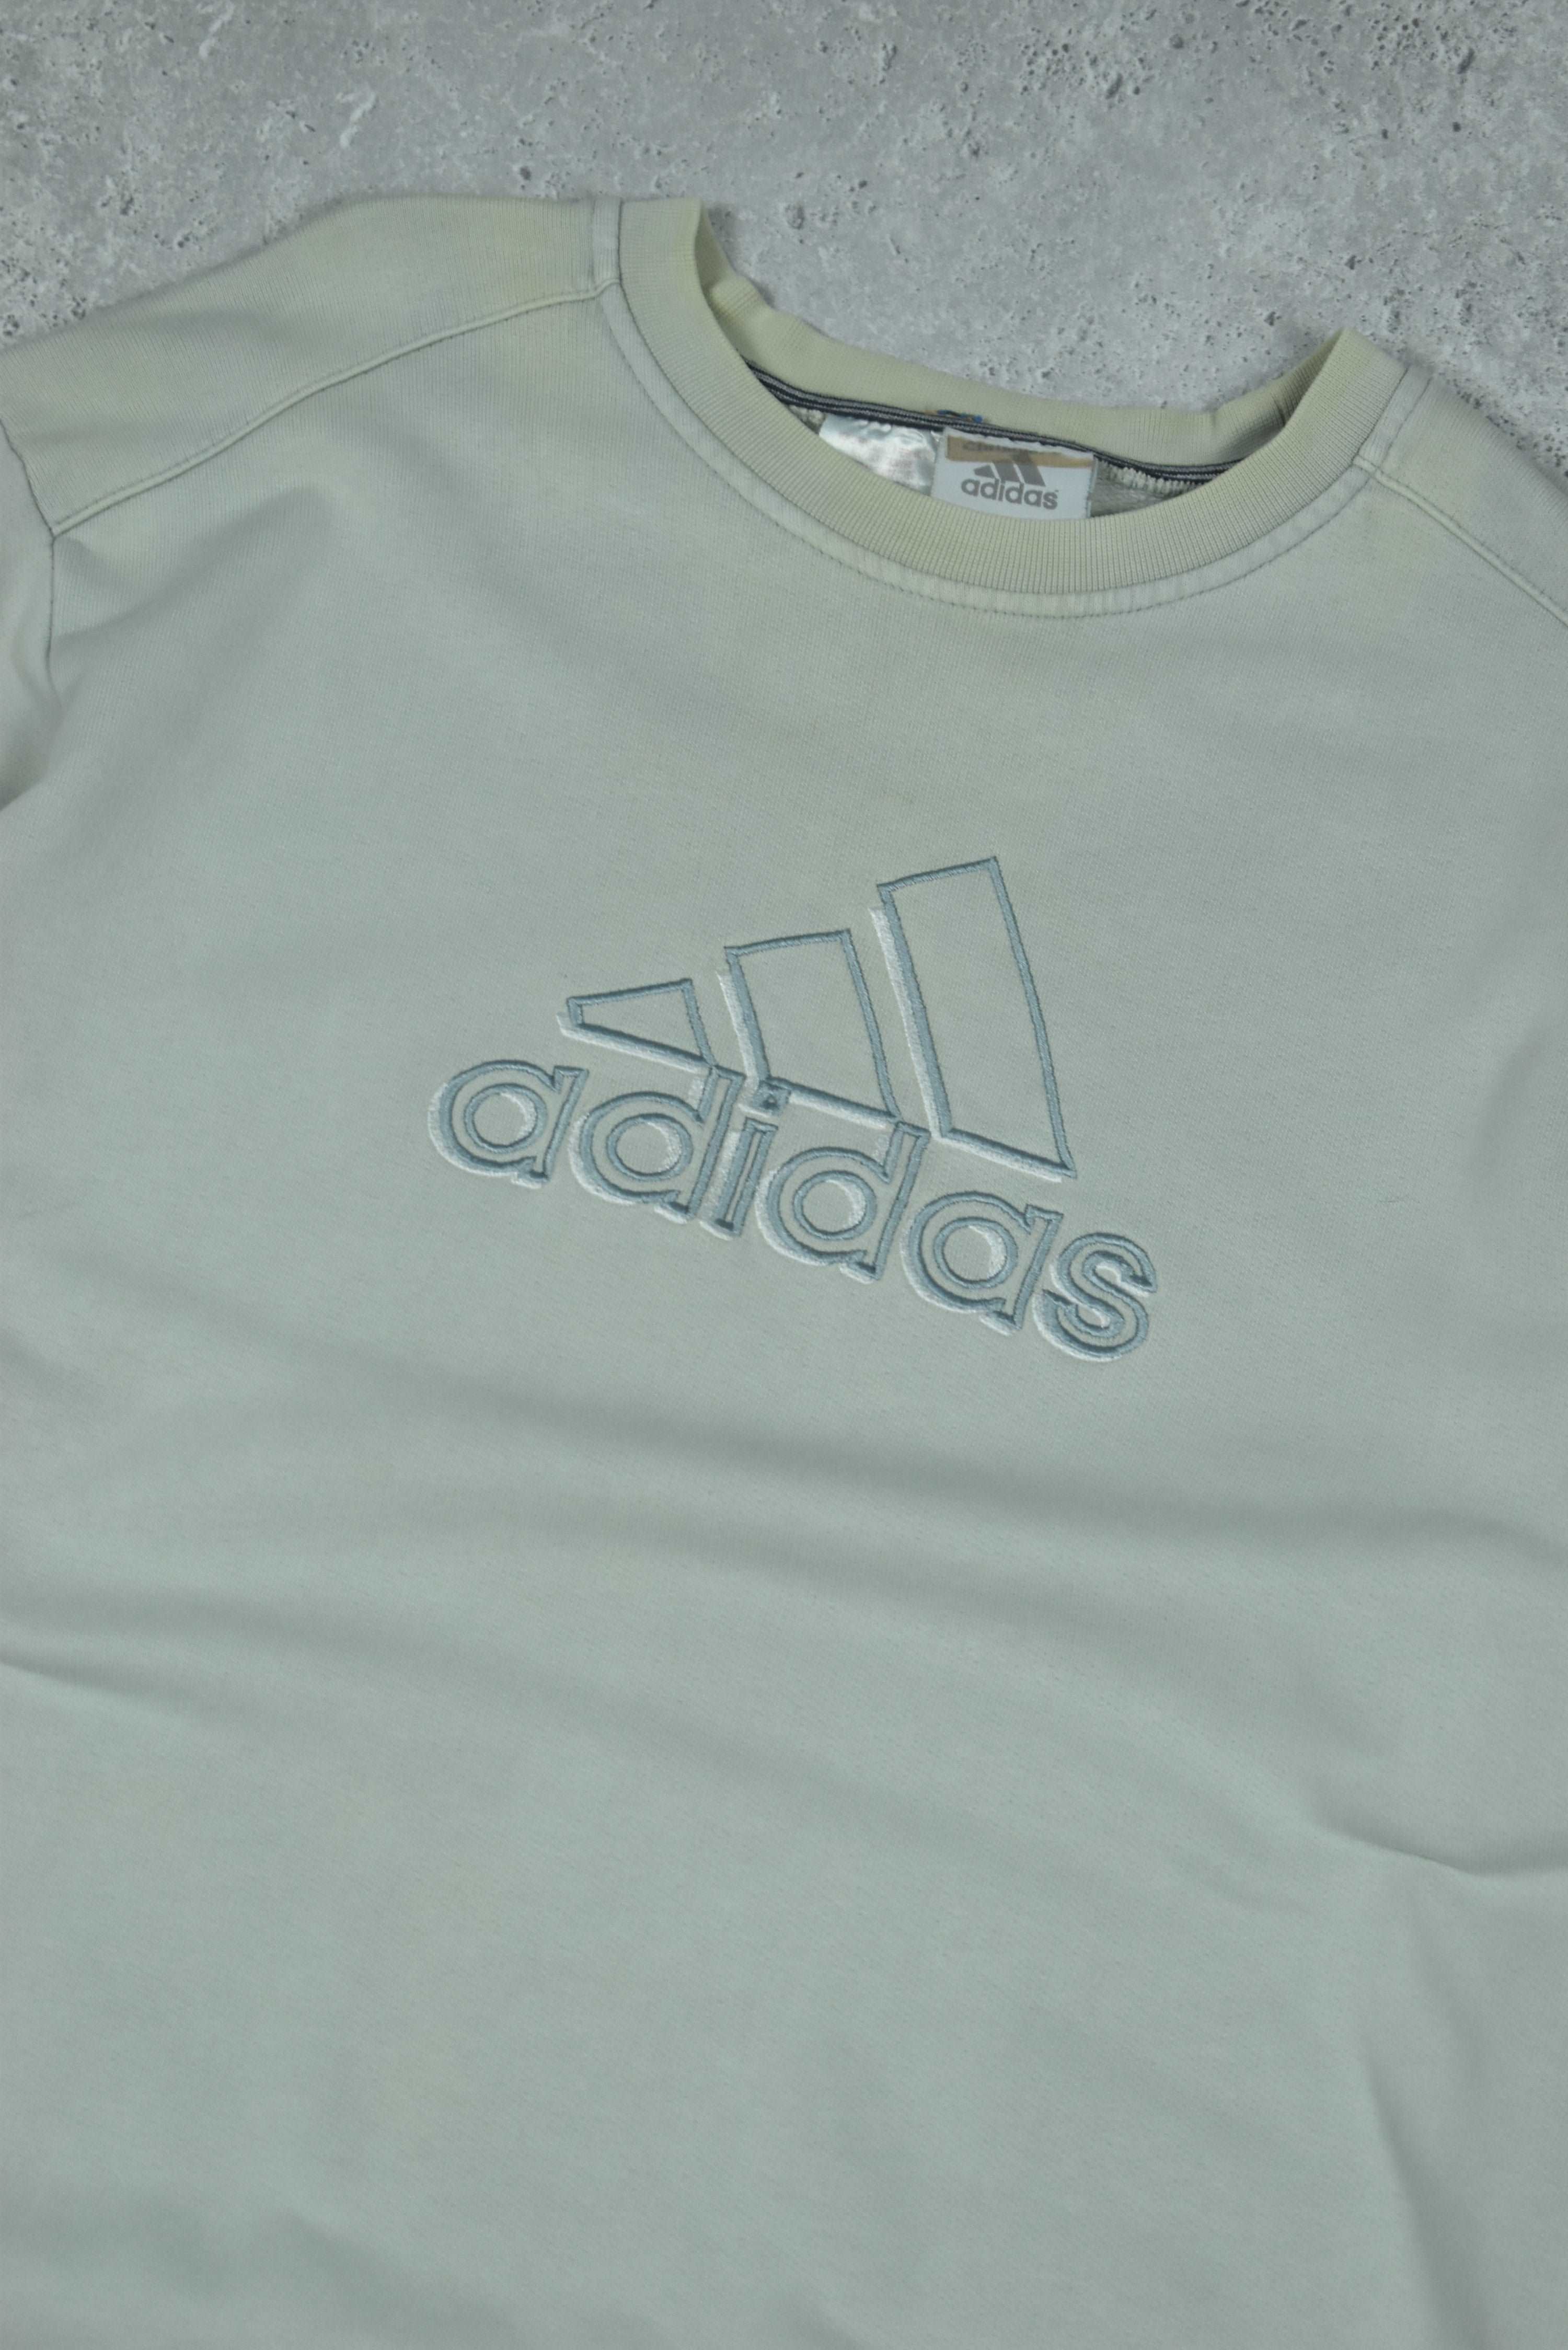 Vintage Adidas Embroidery Logo Sweatshirt Large